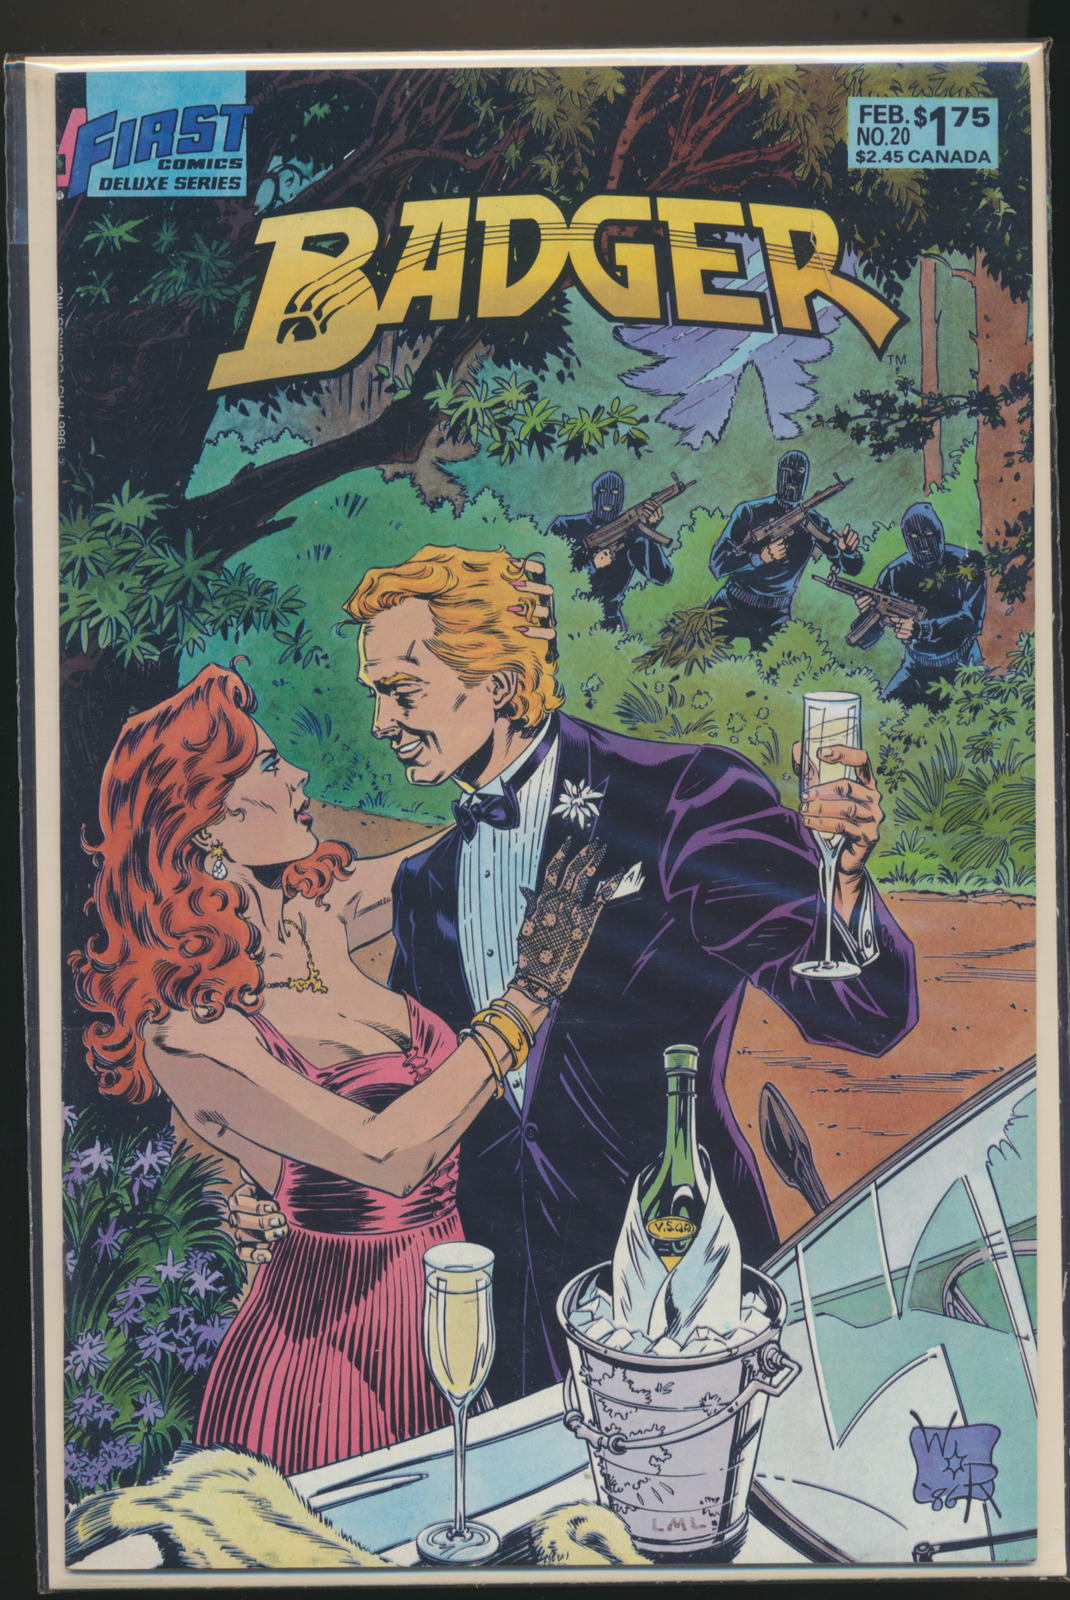 Badger #20, First Comics Comic Book, February 1987, VF++